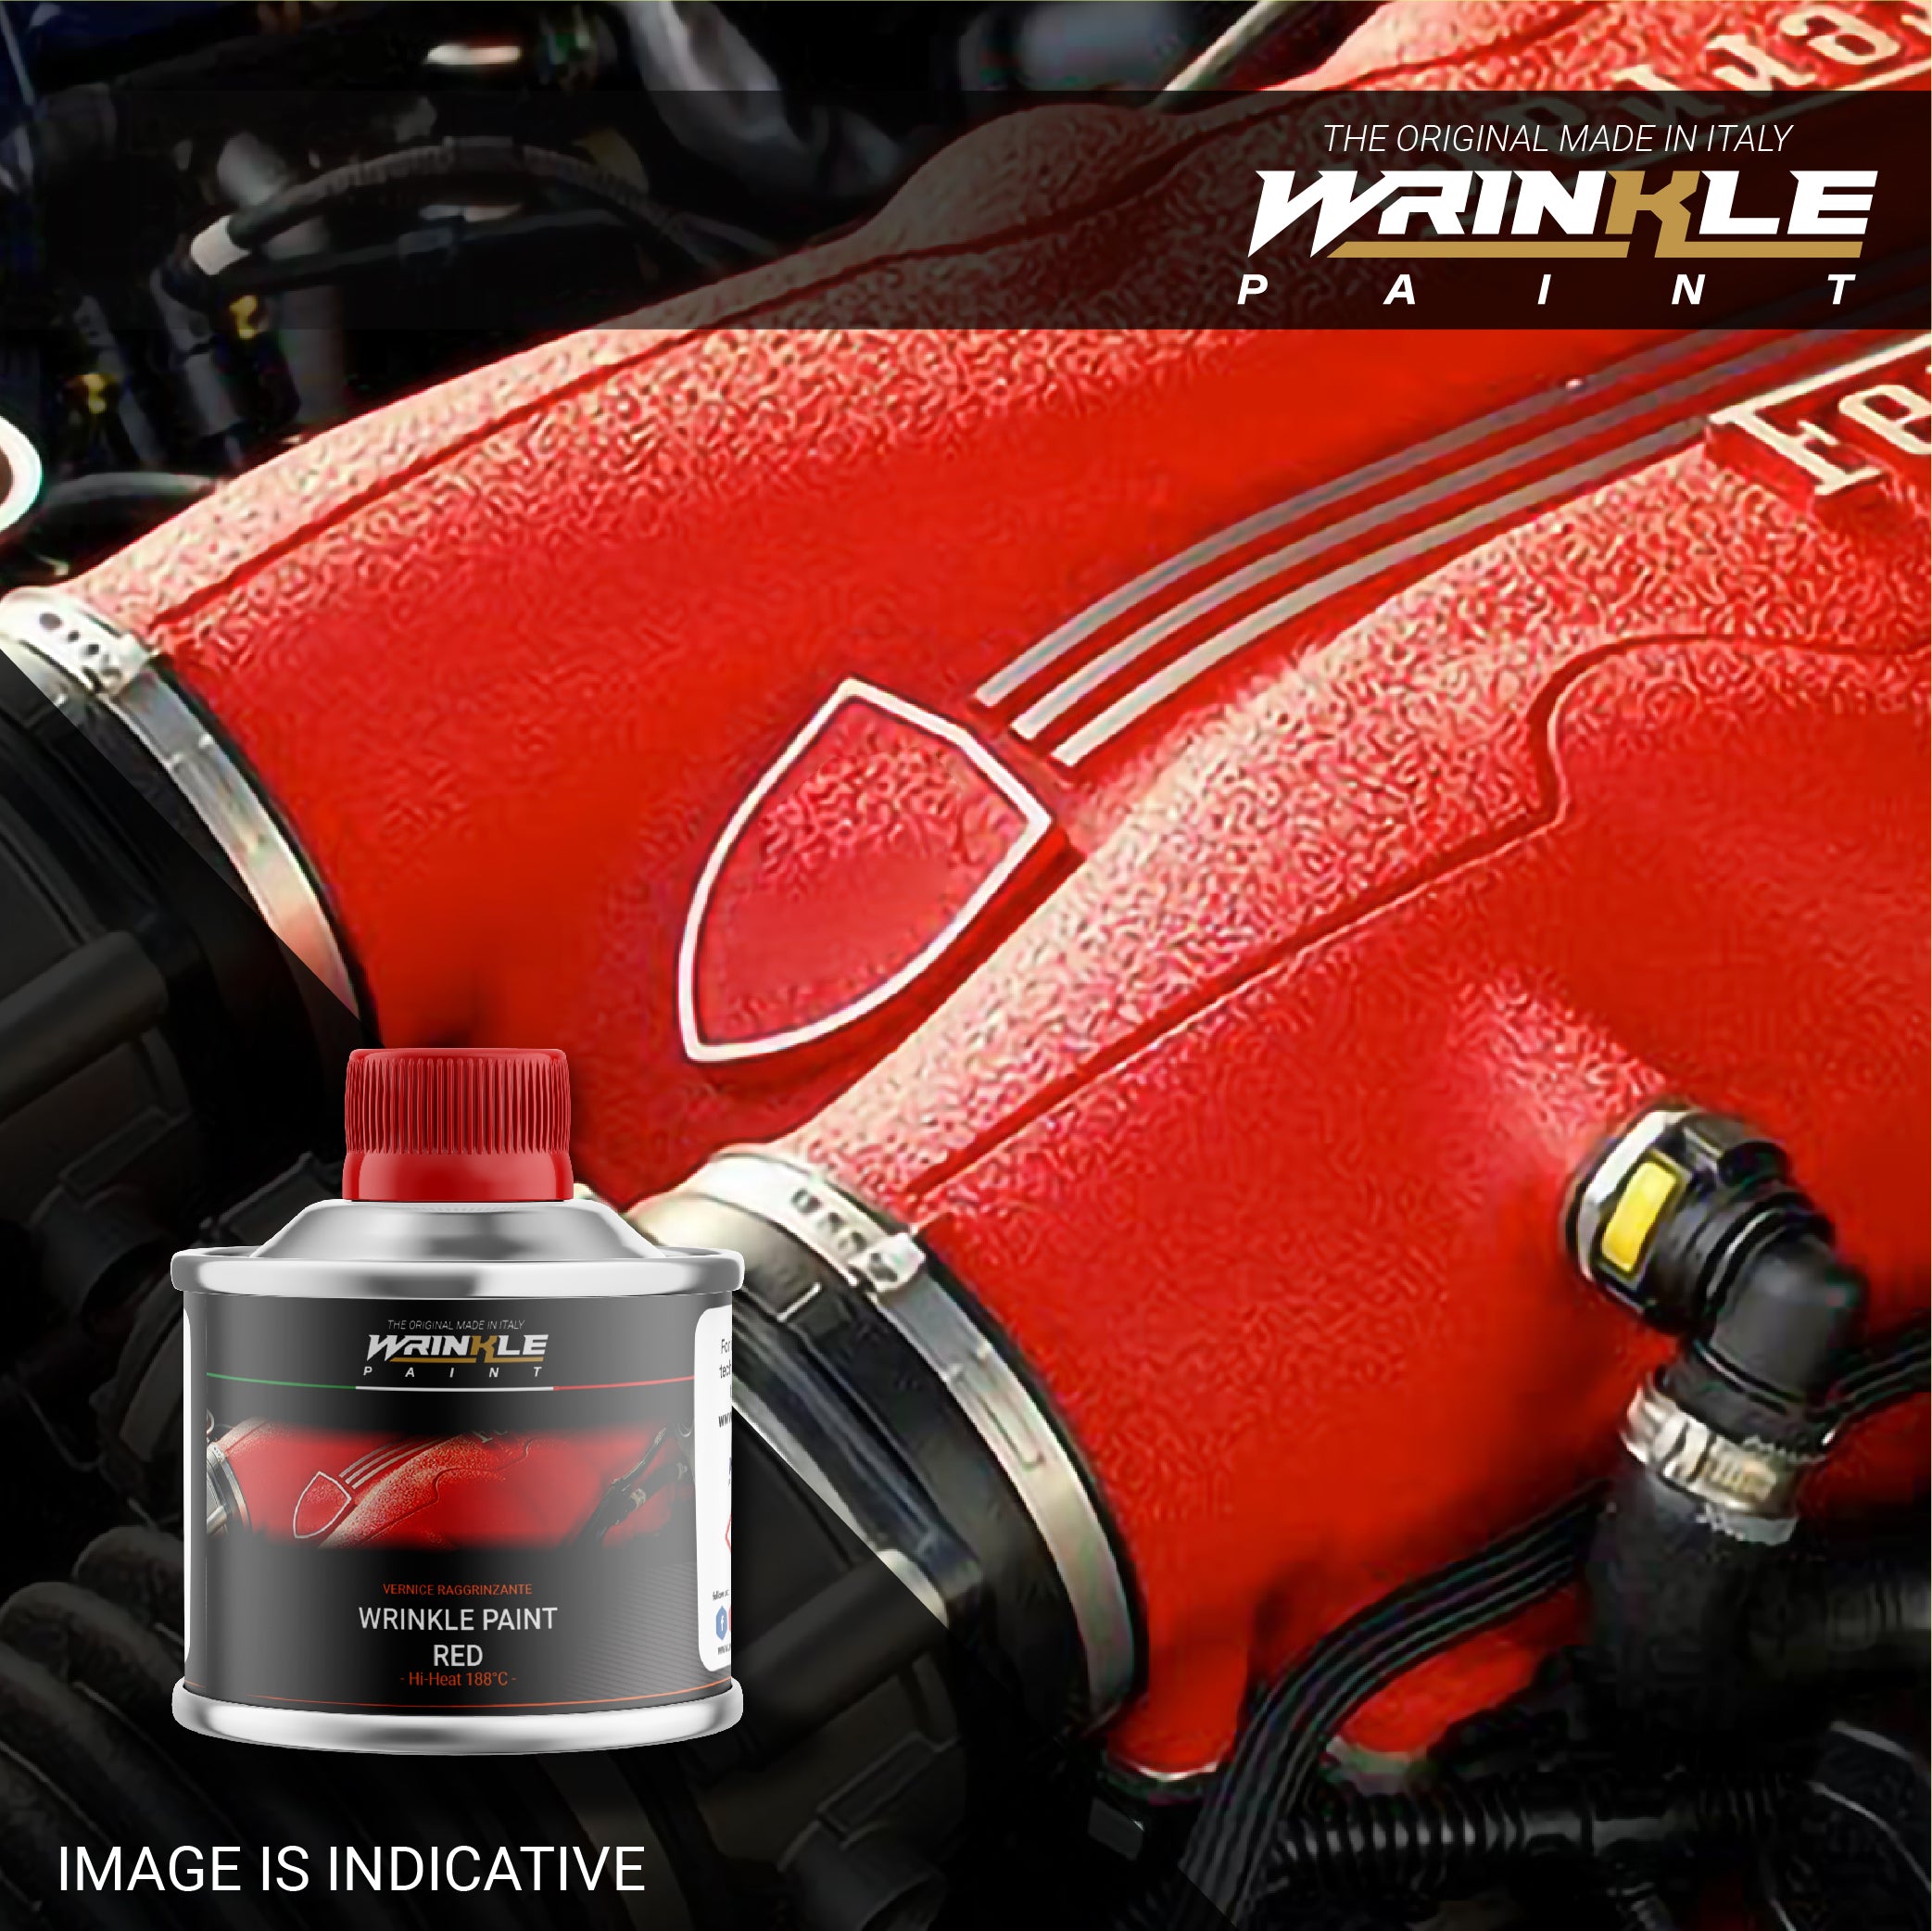 Wrinkle Paint MASERATI RED Engine High Heat - 250 gr